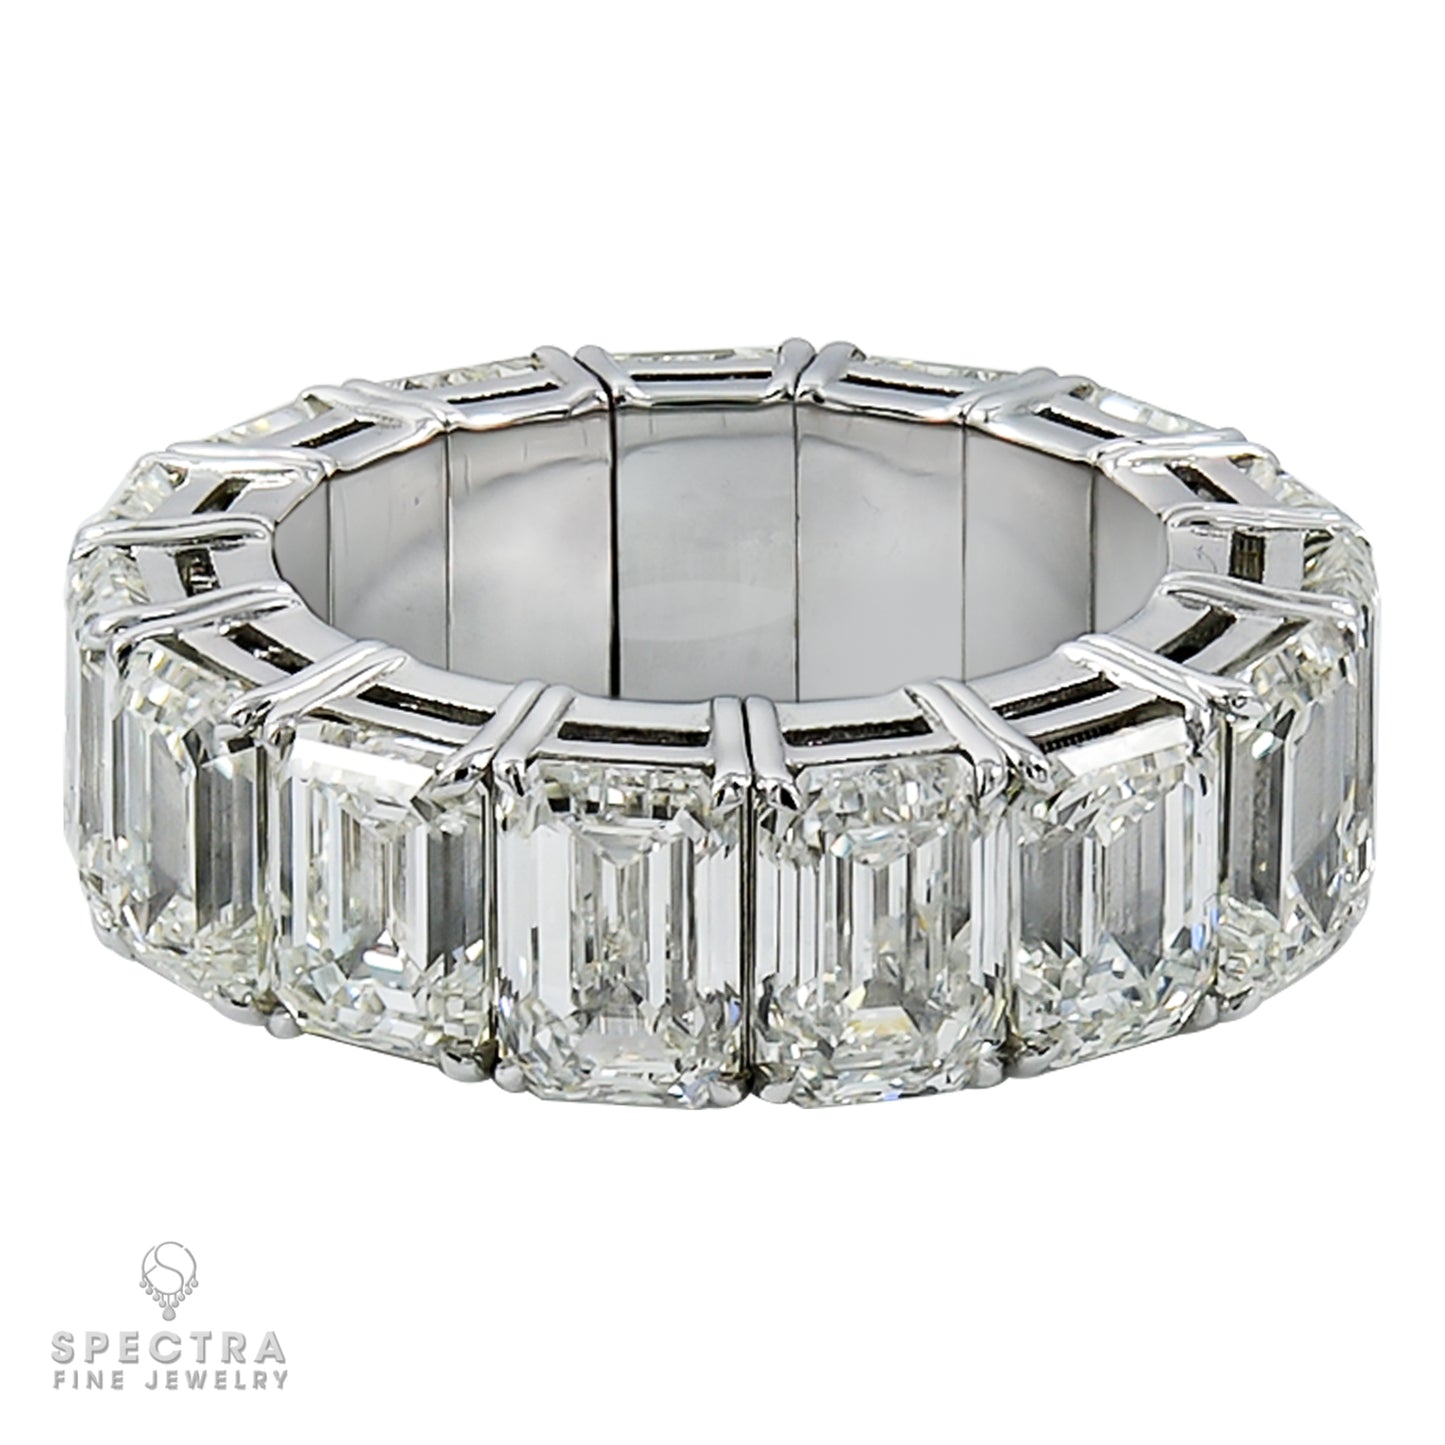 Spectra Fine Jewelry 15.43 ct. Emerald Cut Diamond Flexible Eternity Wedding Band